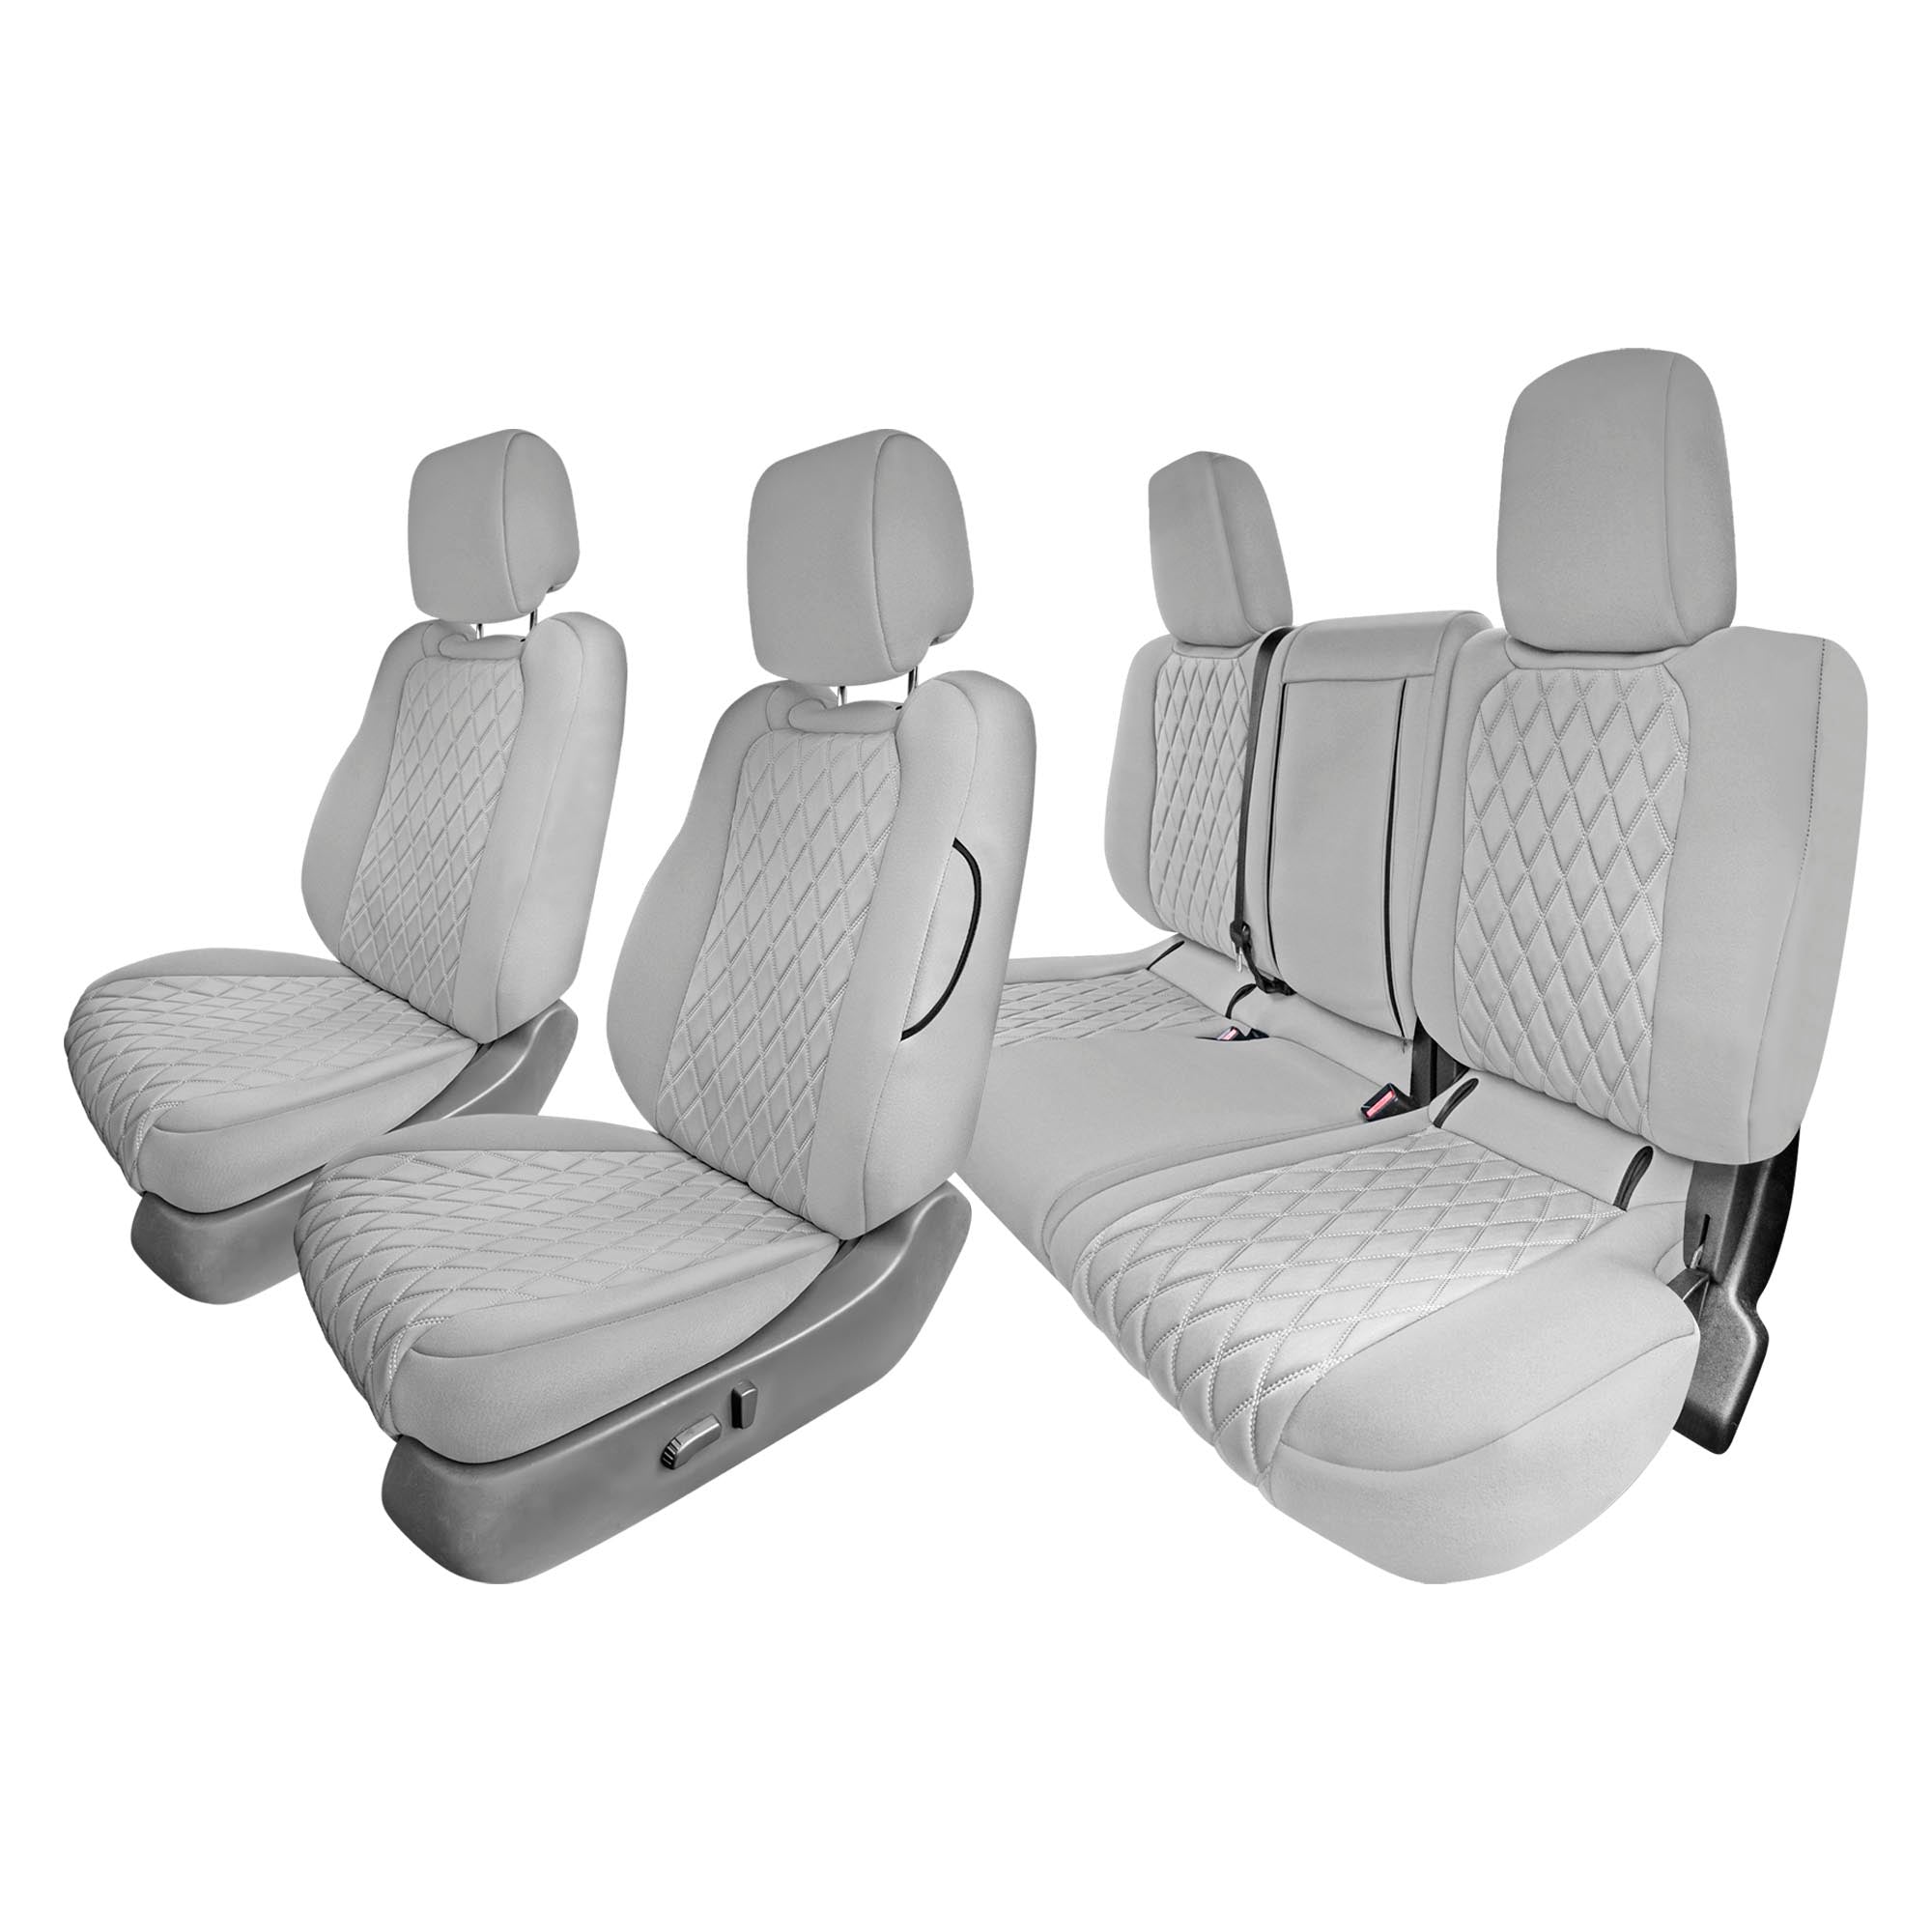 Nissan Titan King Cab/Crew Cab - 2017-2022 - Full Set Seat Covers - Solid Gray Ultraflex Neoprene